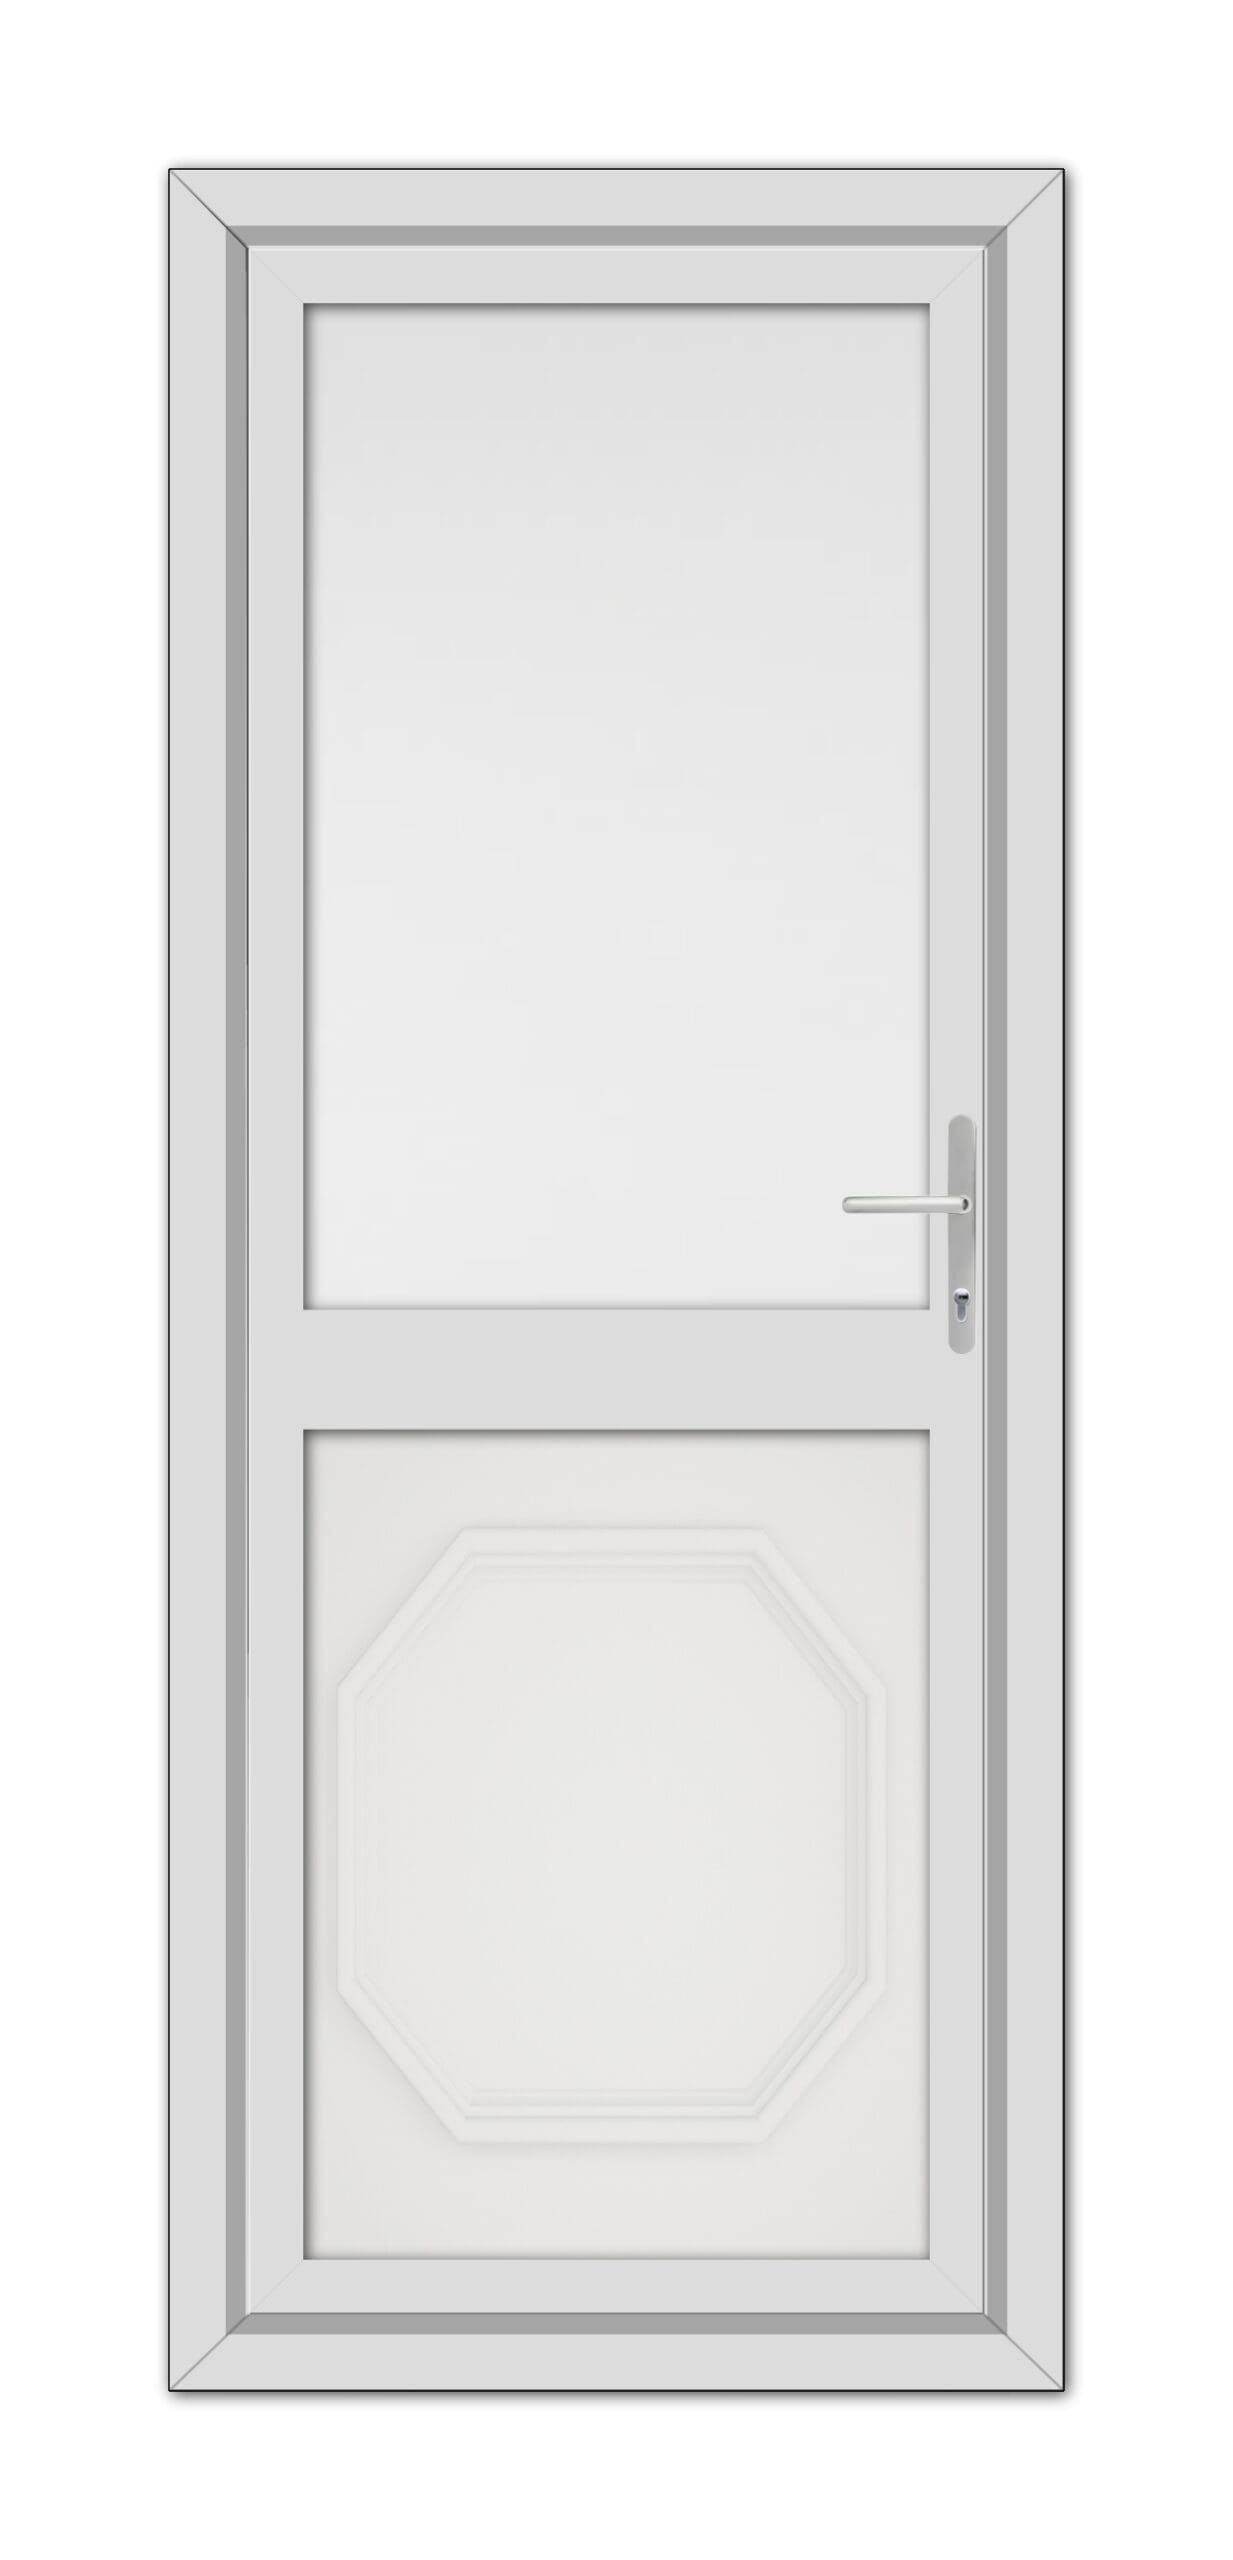 A modern White Buckingham Half uPVC Back Door featuring a rectangular top window, hexagonal lower panel, and a metallic handle, set within a simple frame.